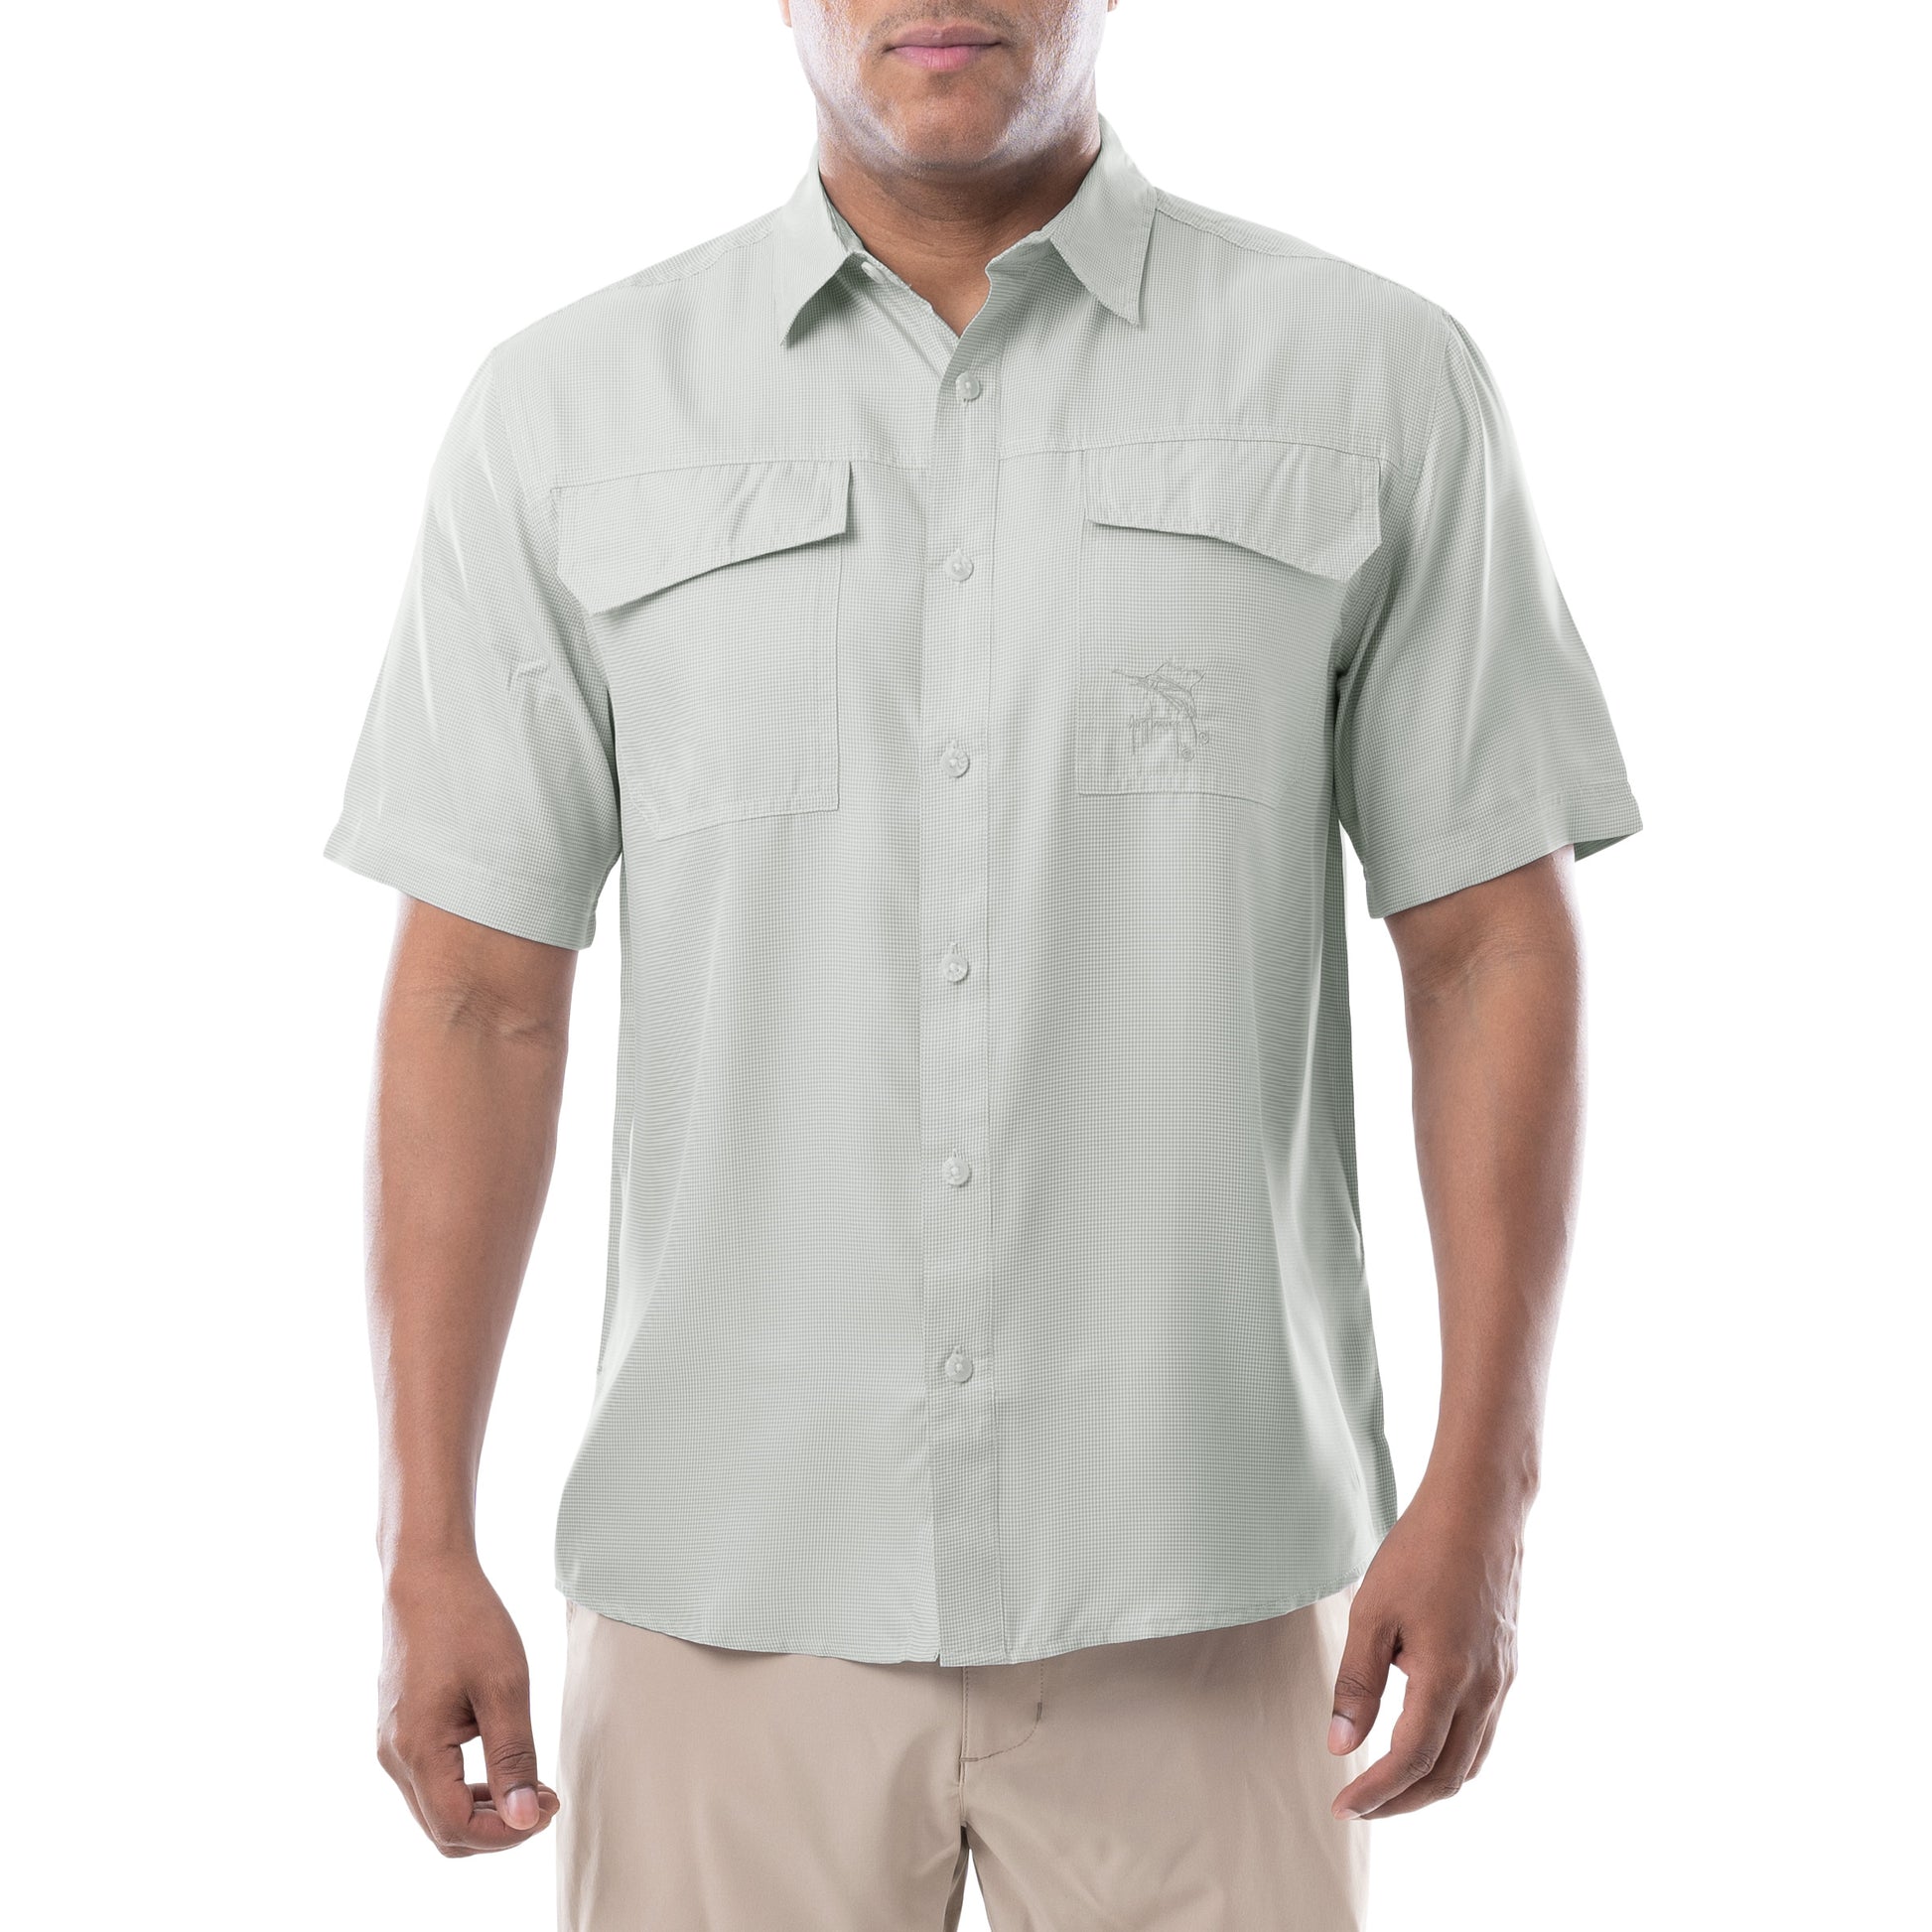 Guy Harvey | Men's Short Sleeve Texture Gingham Performance Fishing Shirt, Estate Blue, Large